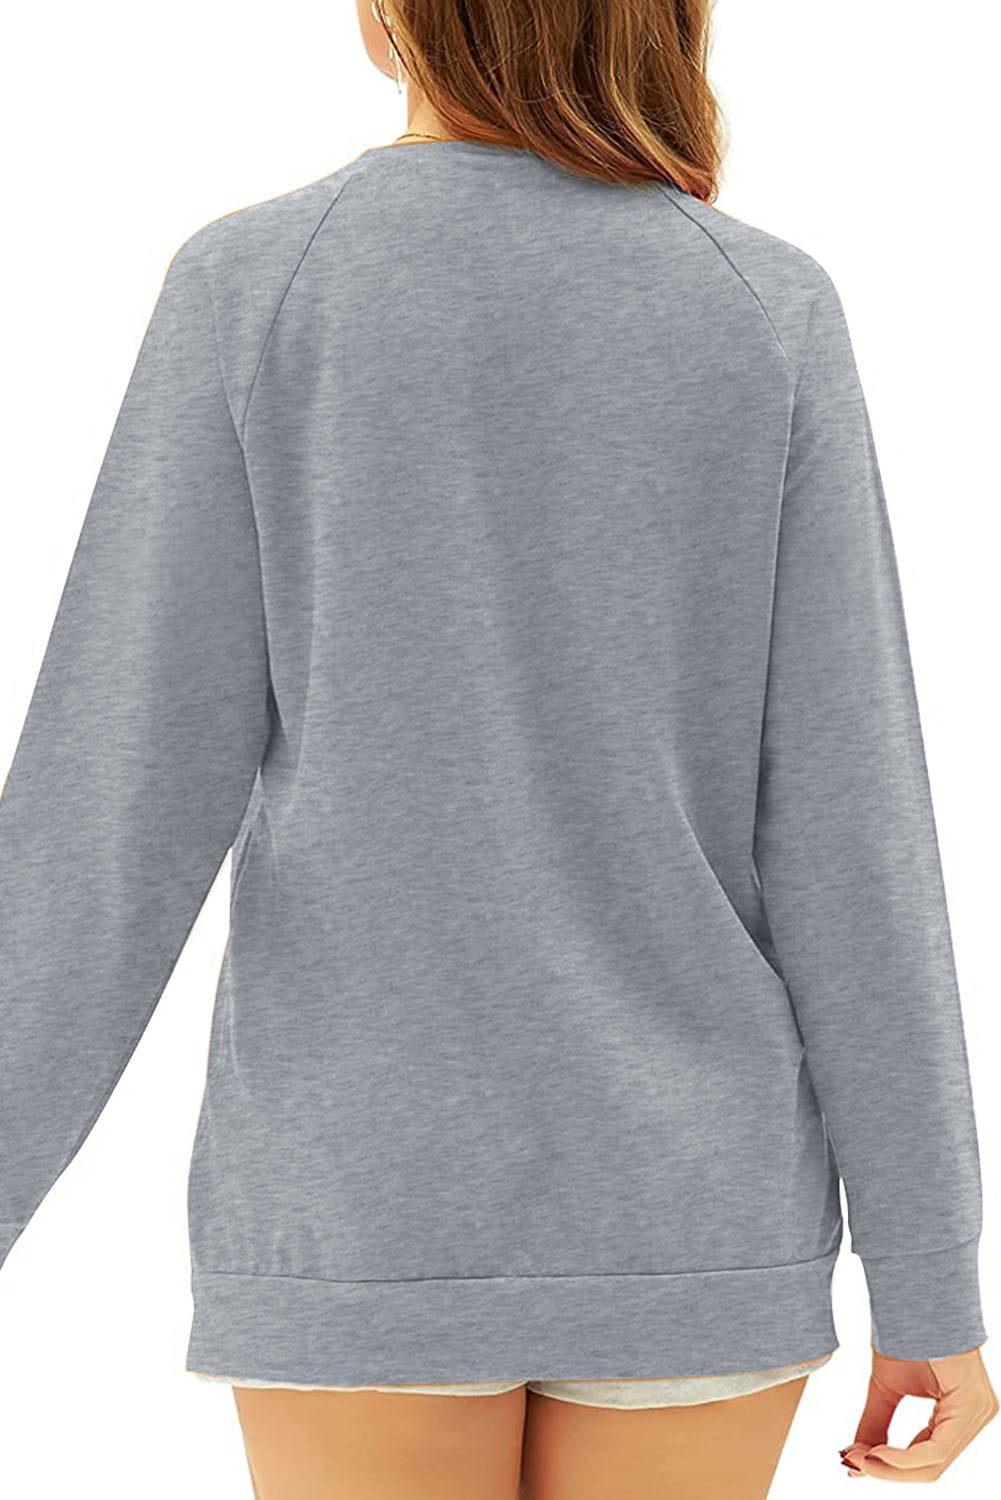 Grey Dandelion Graphic Sweatshirt